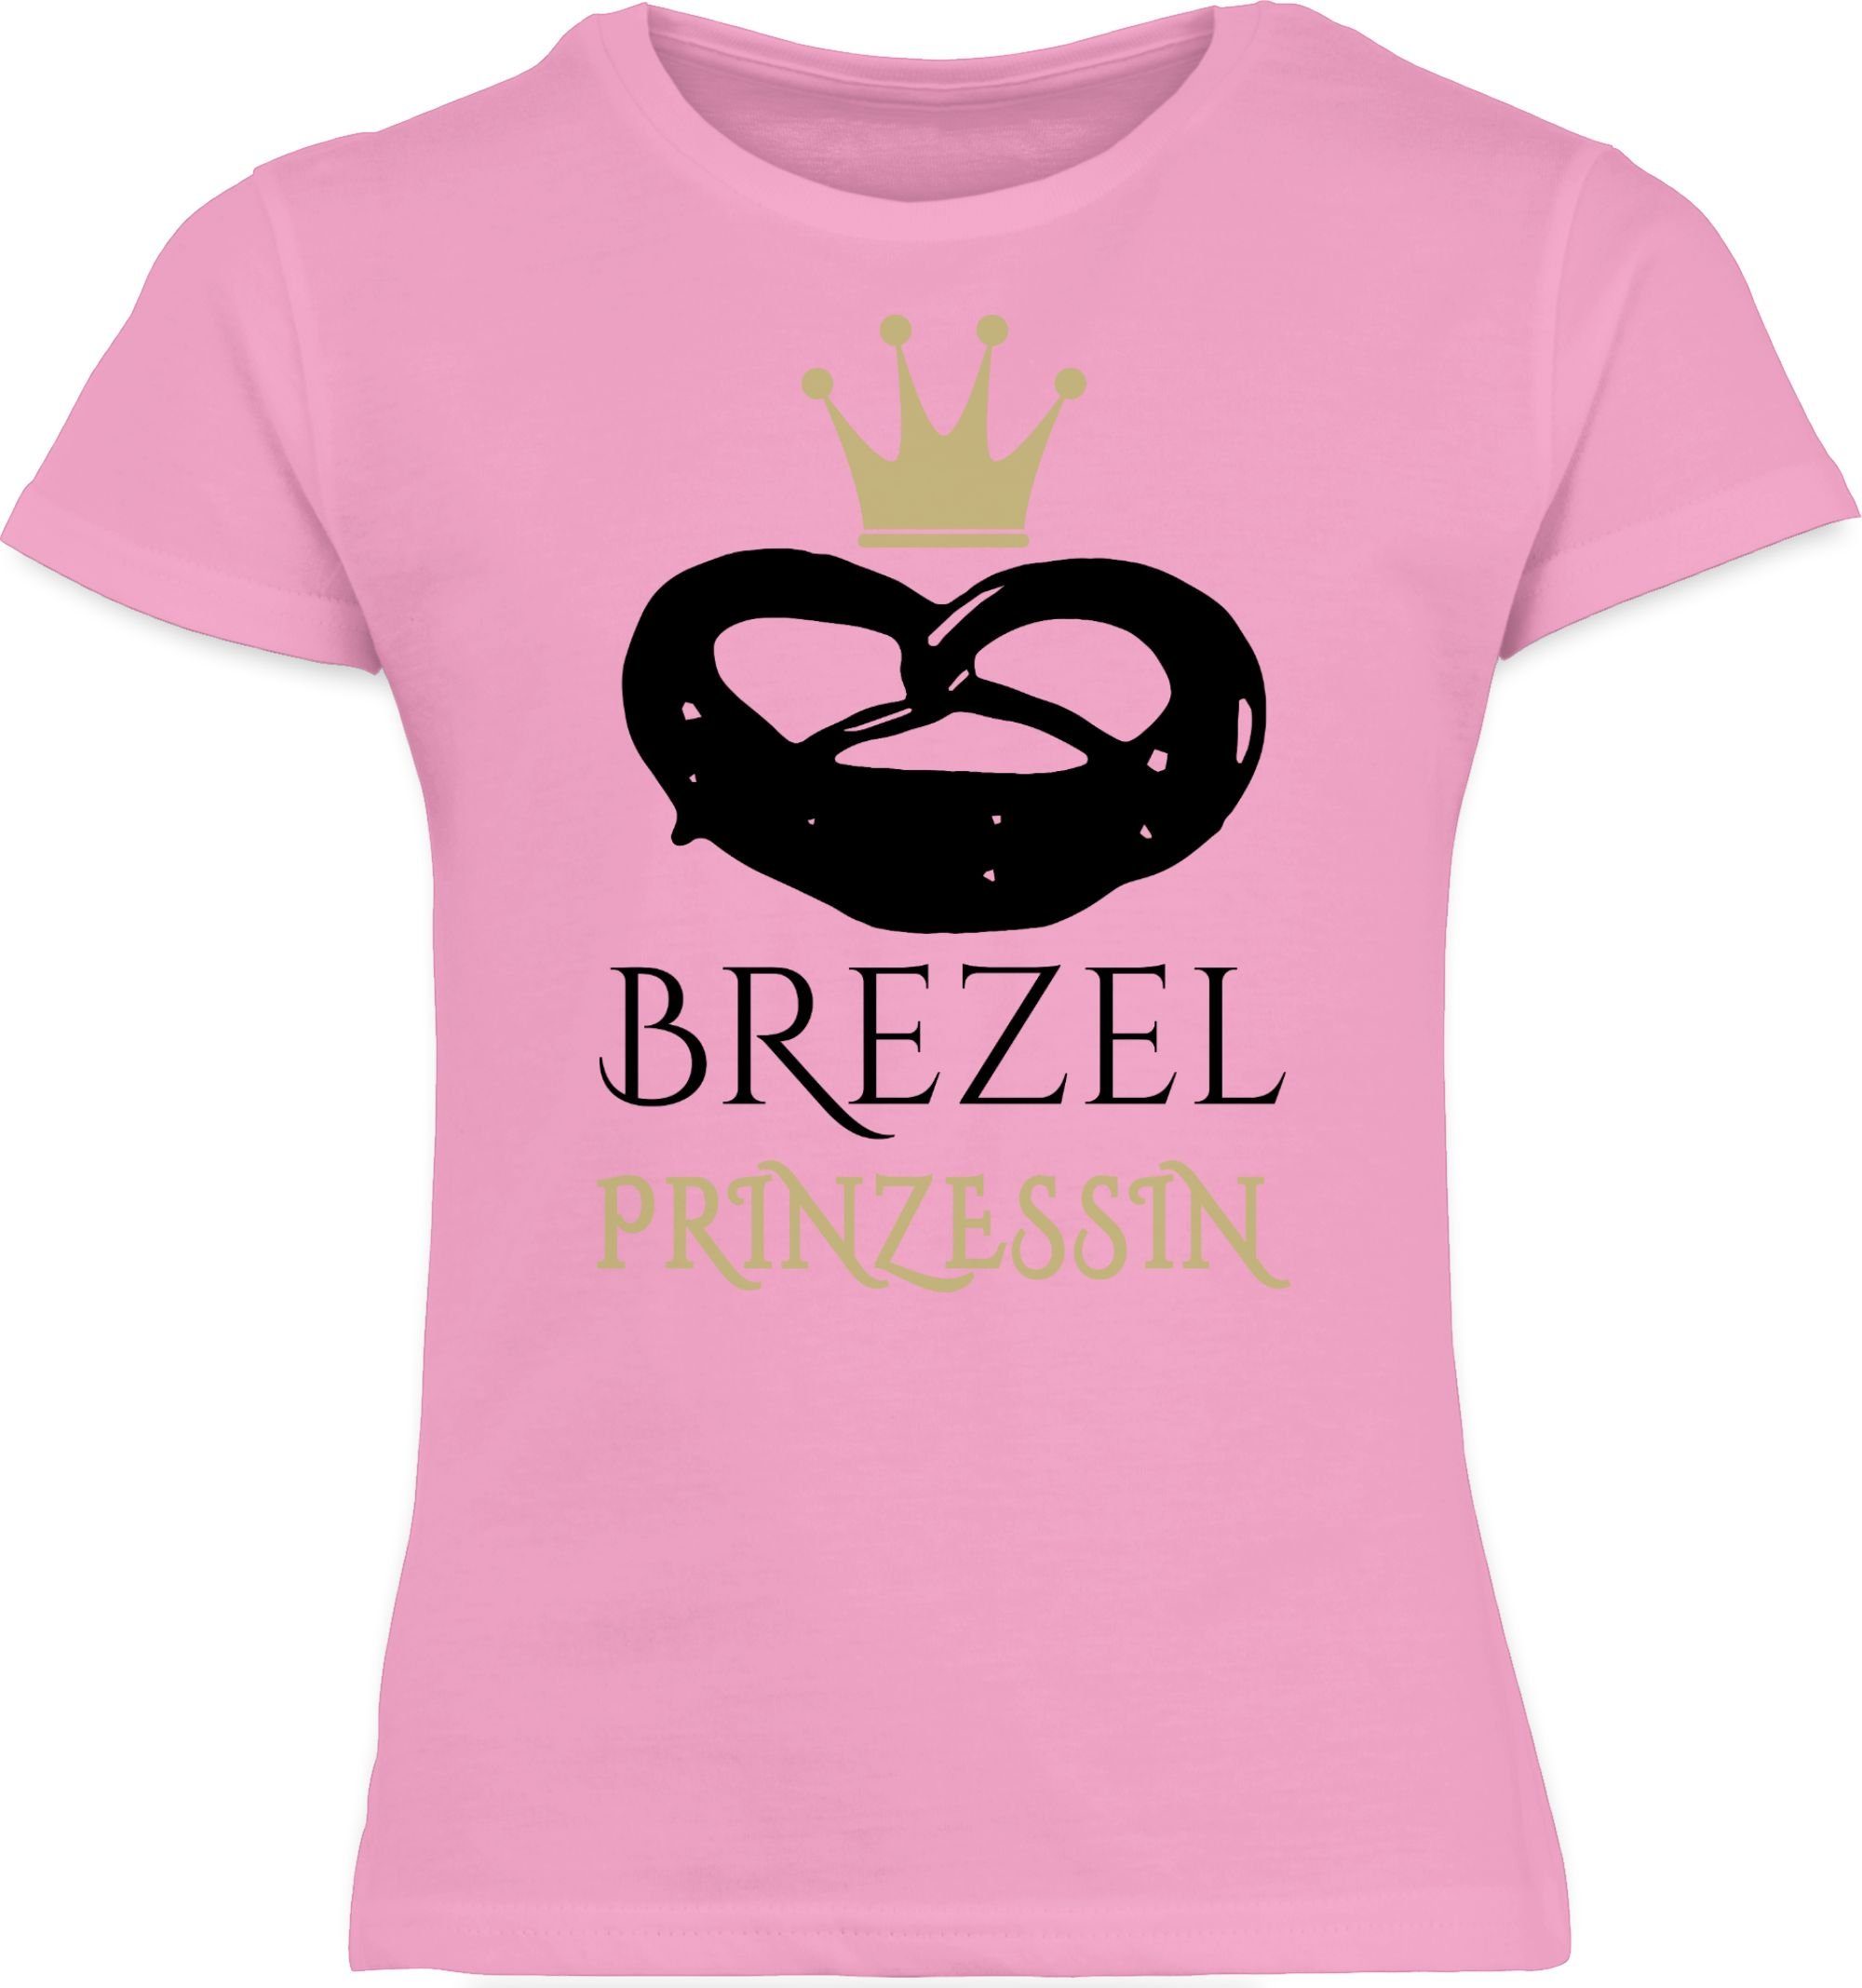 Shirtracer Kinder T-Shirt Outfit Prinzessin Rosa Mode 2 Brezel für Oktoberfest